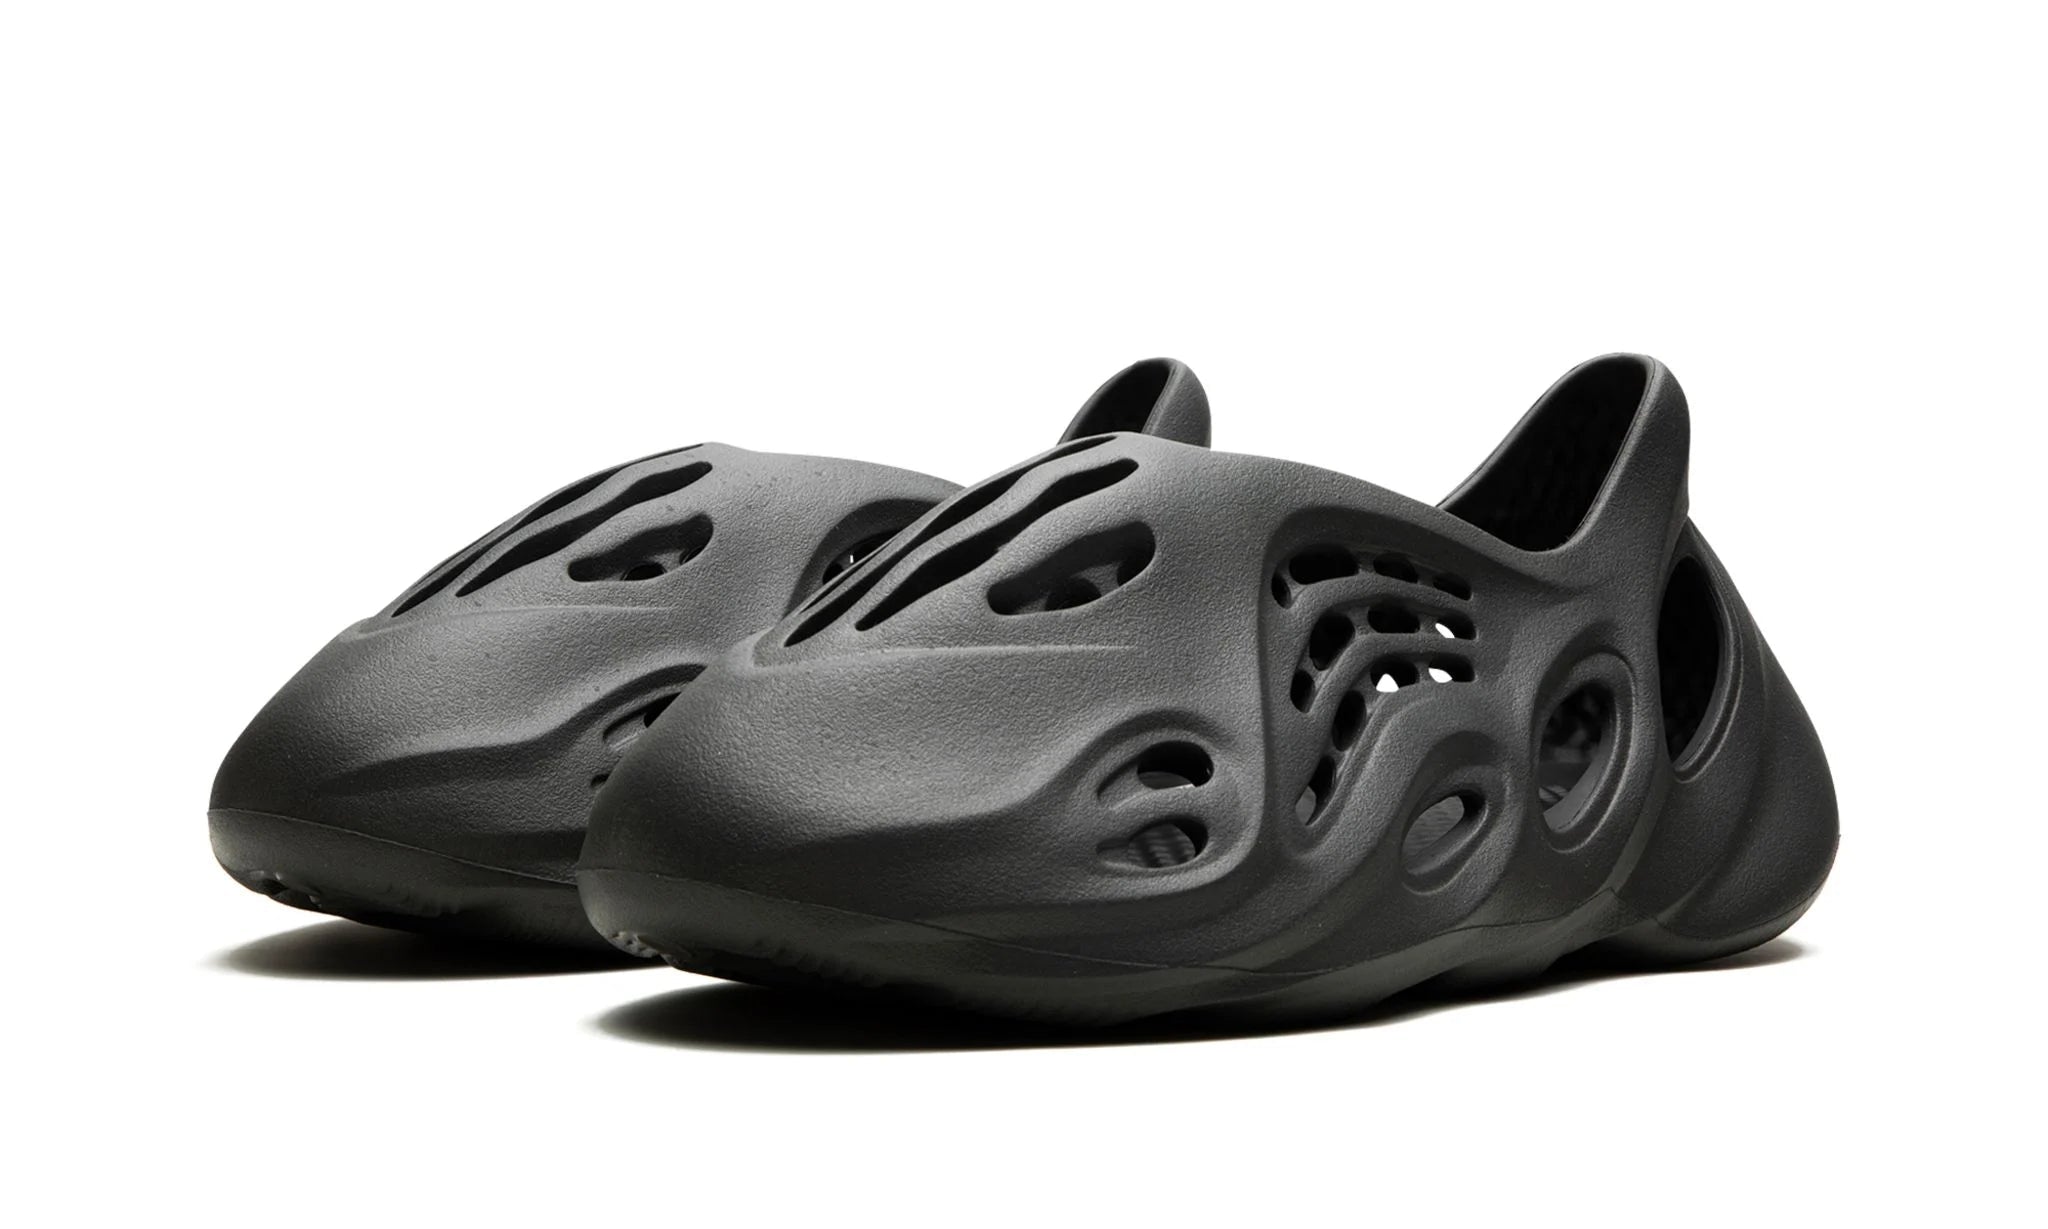 Adidas Yeezy Foam Runner Carbon - Yeezy Foam Runner - Pirri